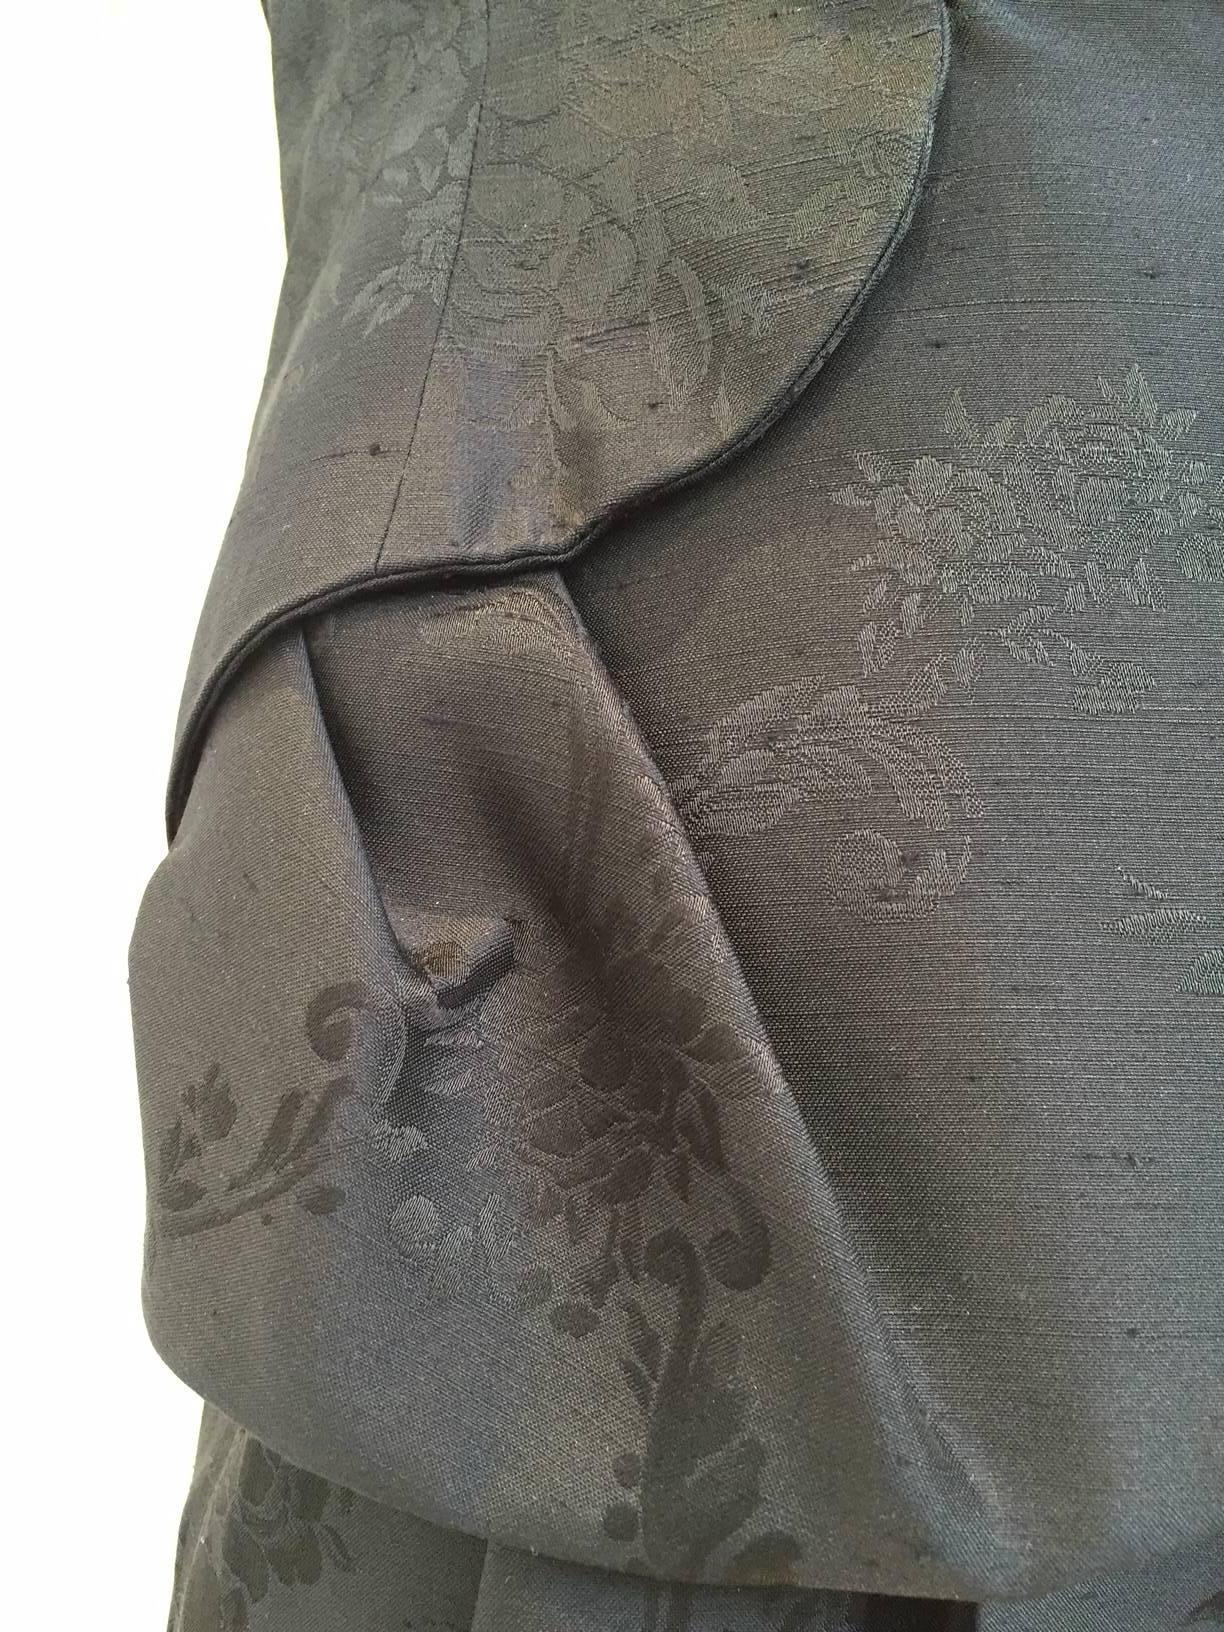 Women's John Galliano black silk jacquard top and pant set